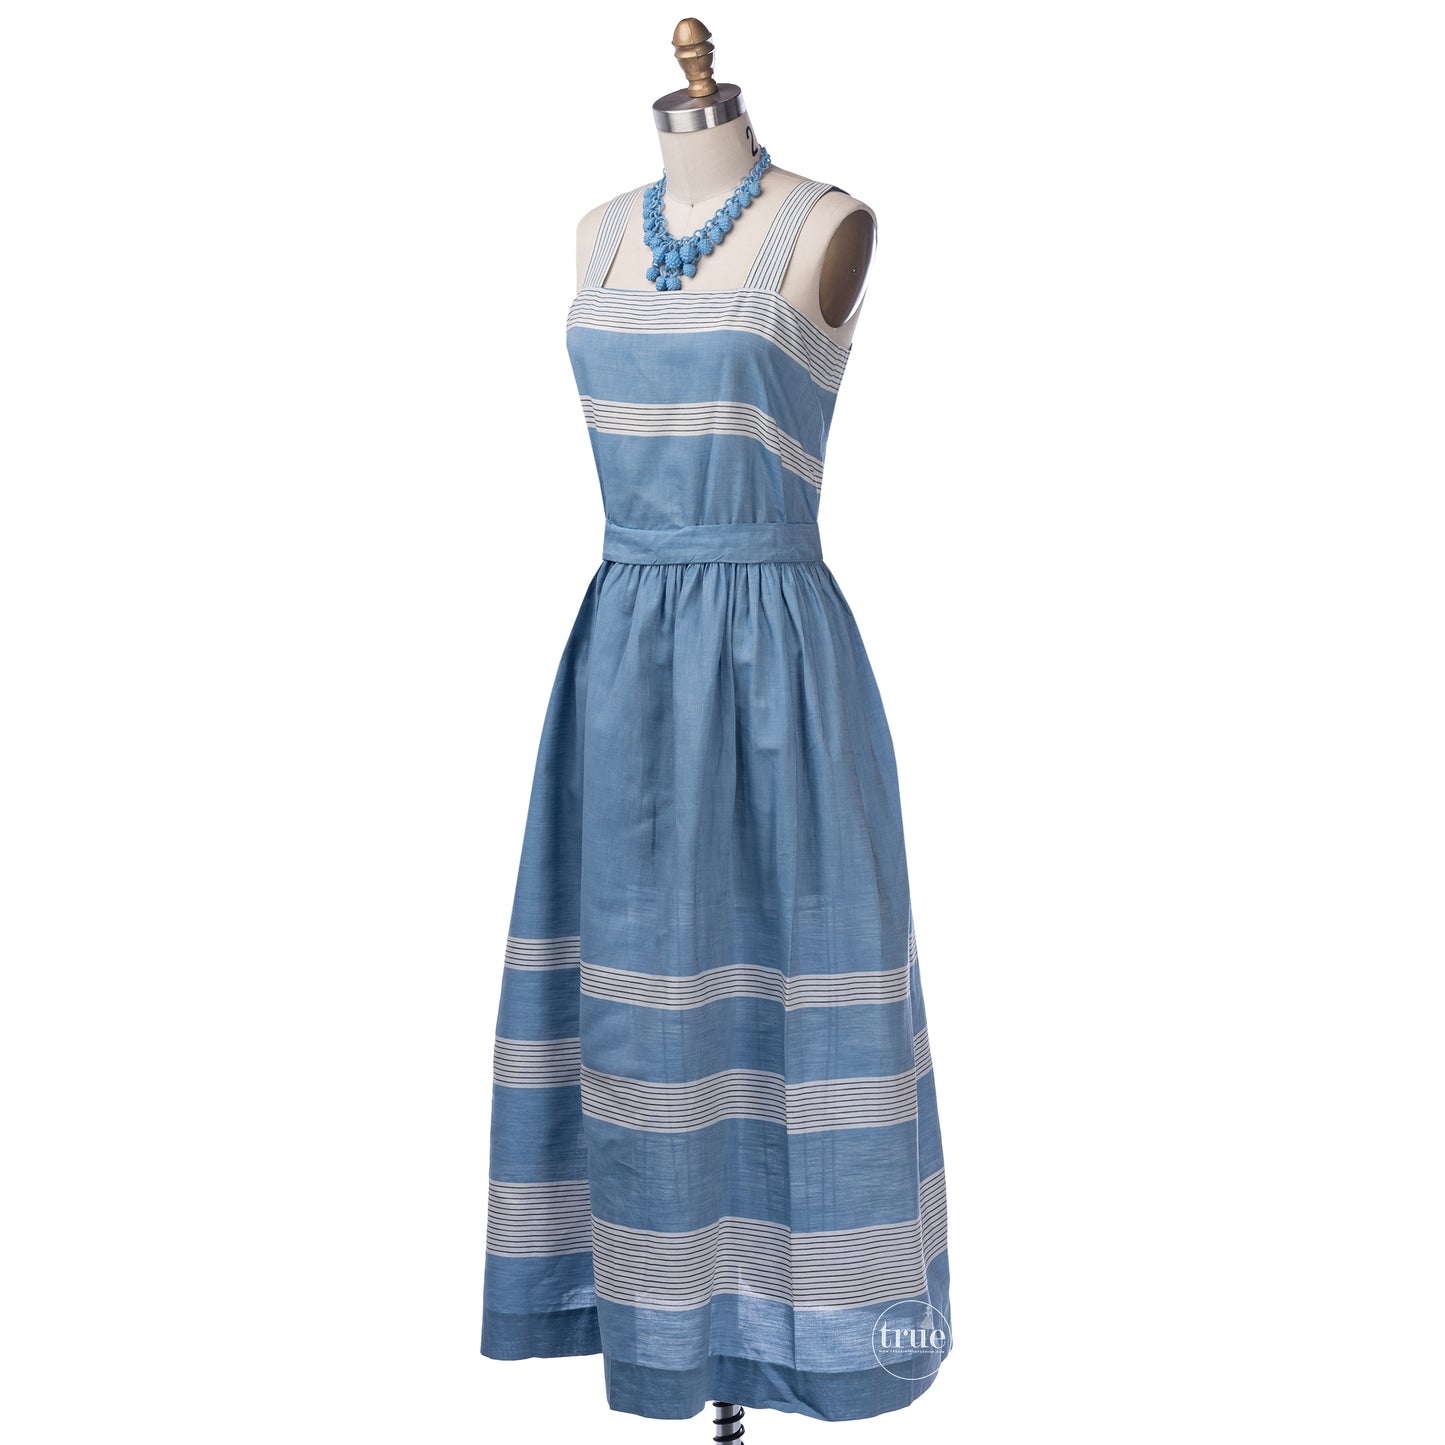 vintage 1940's dress ...classic make mine a McKettrick chambray cotton and stripes sundress and bolero